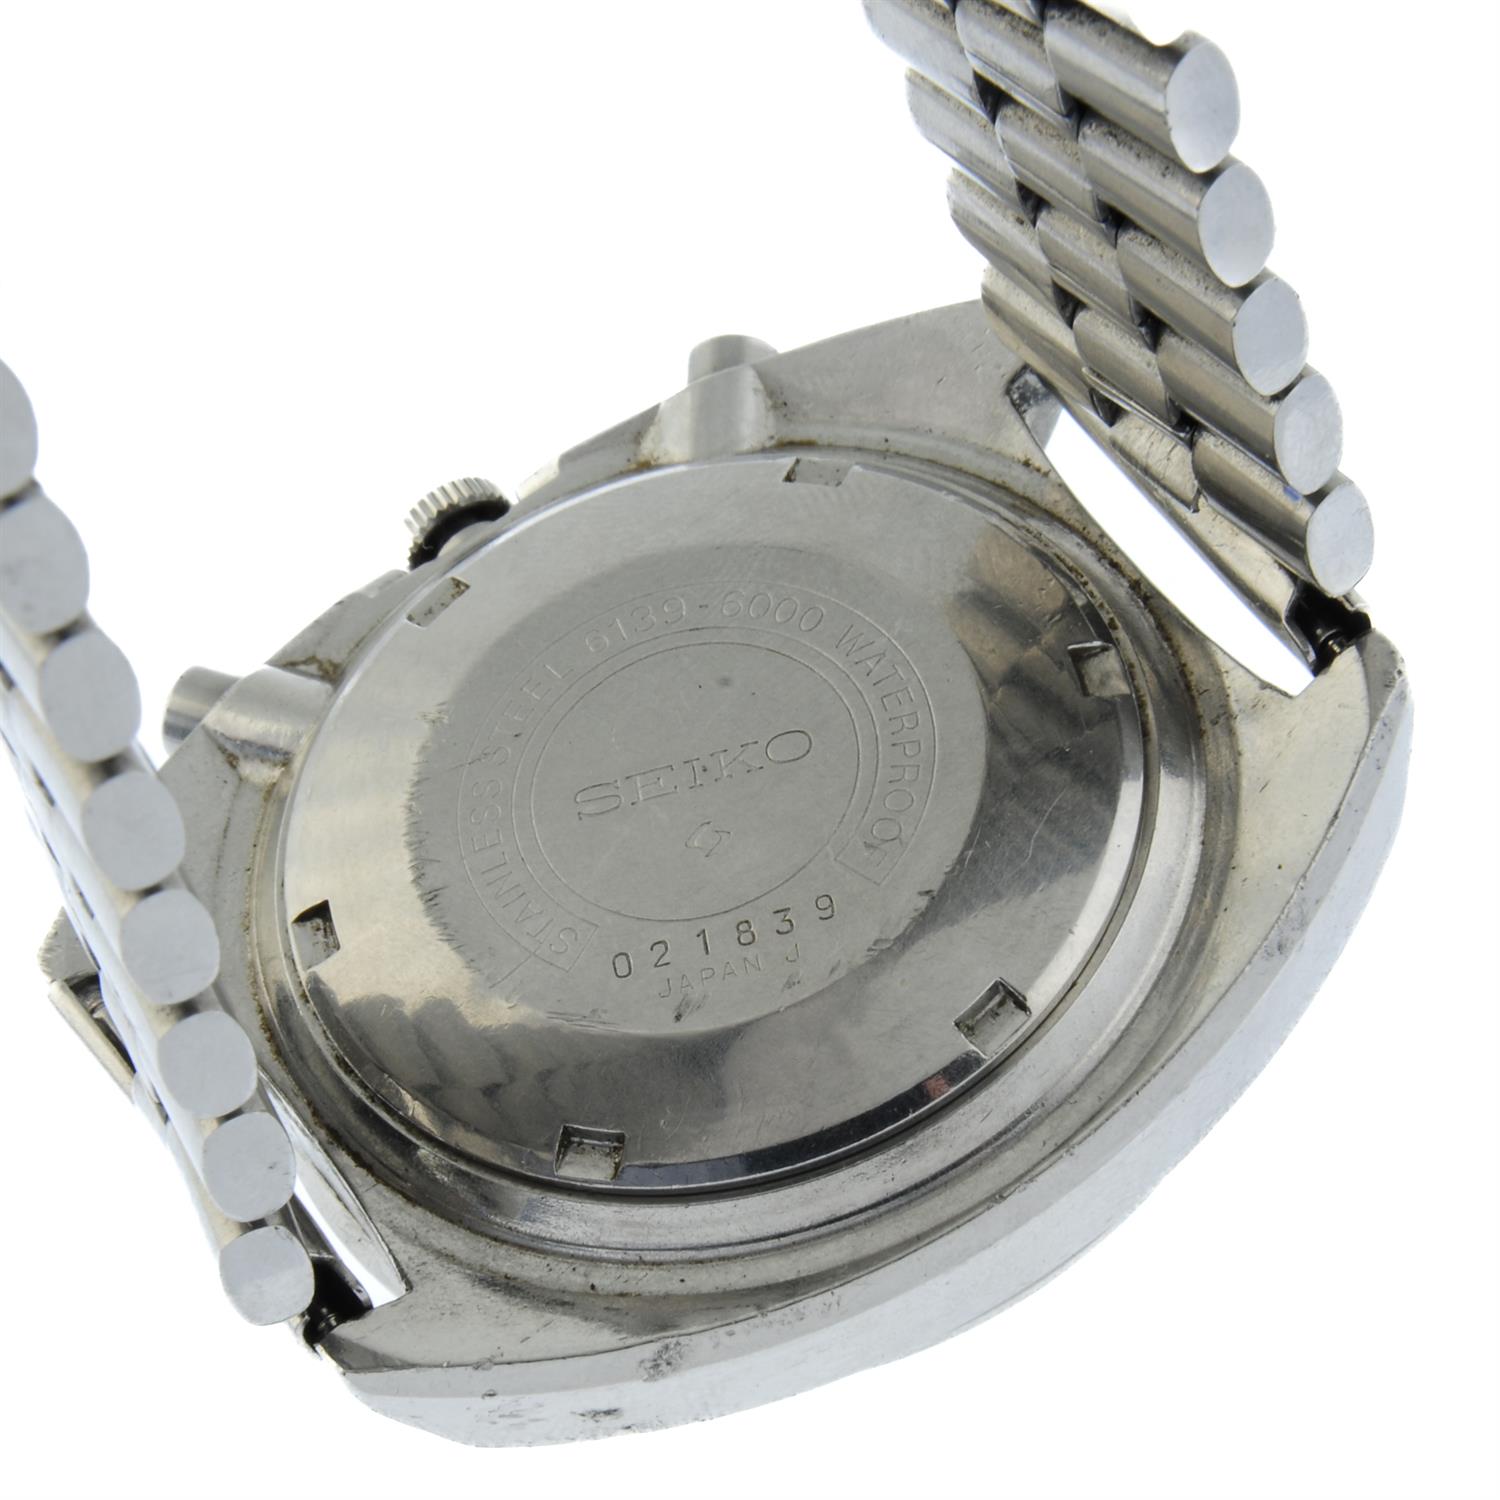 Seiko - a 'Pogue' chronograph watch, 41mm. - Image 4 of 4